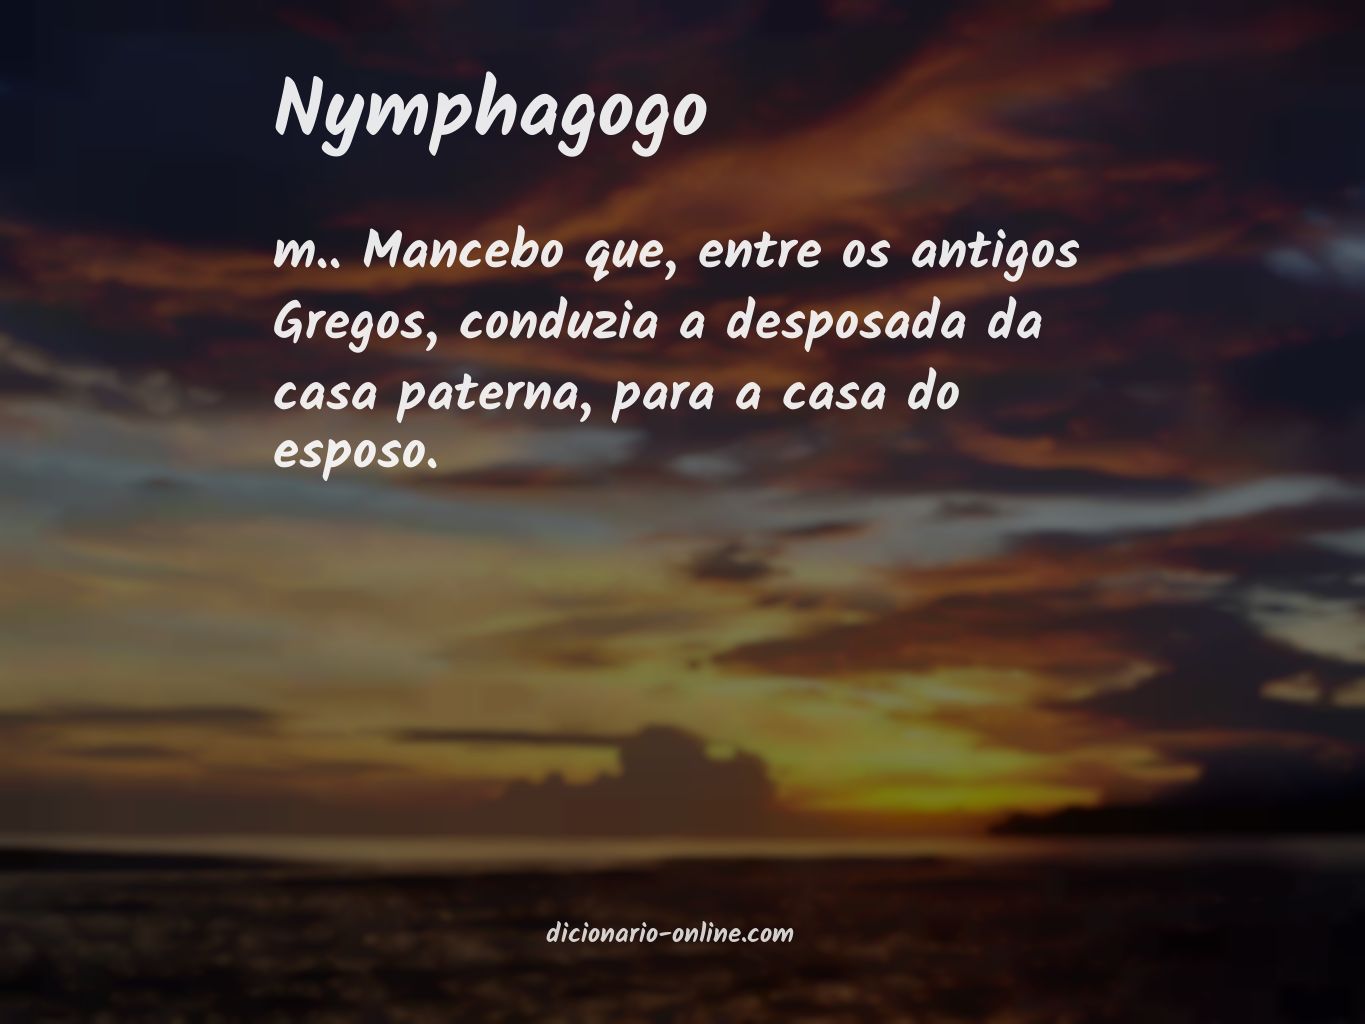 Significado de nymphagogo